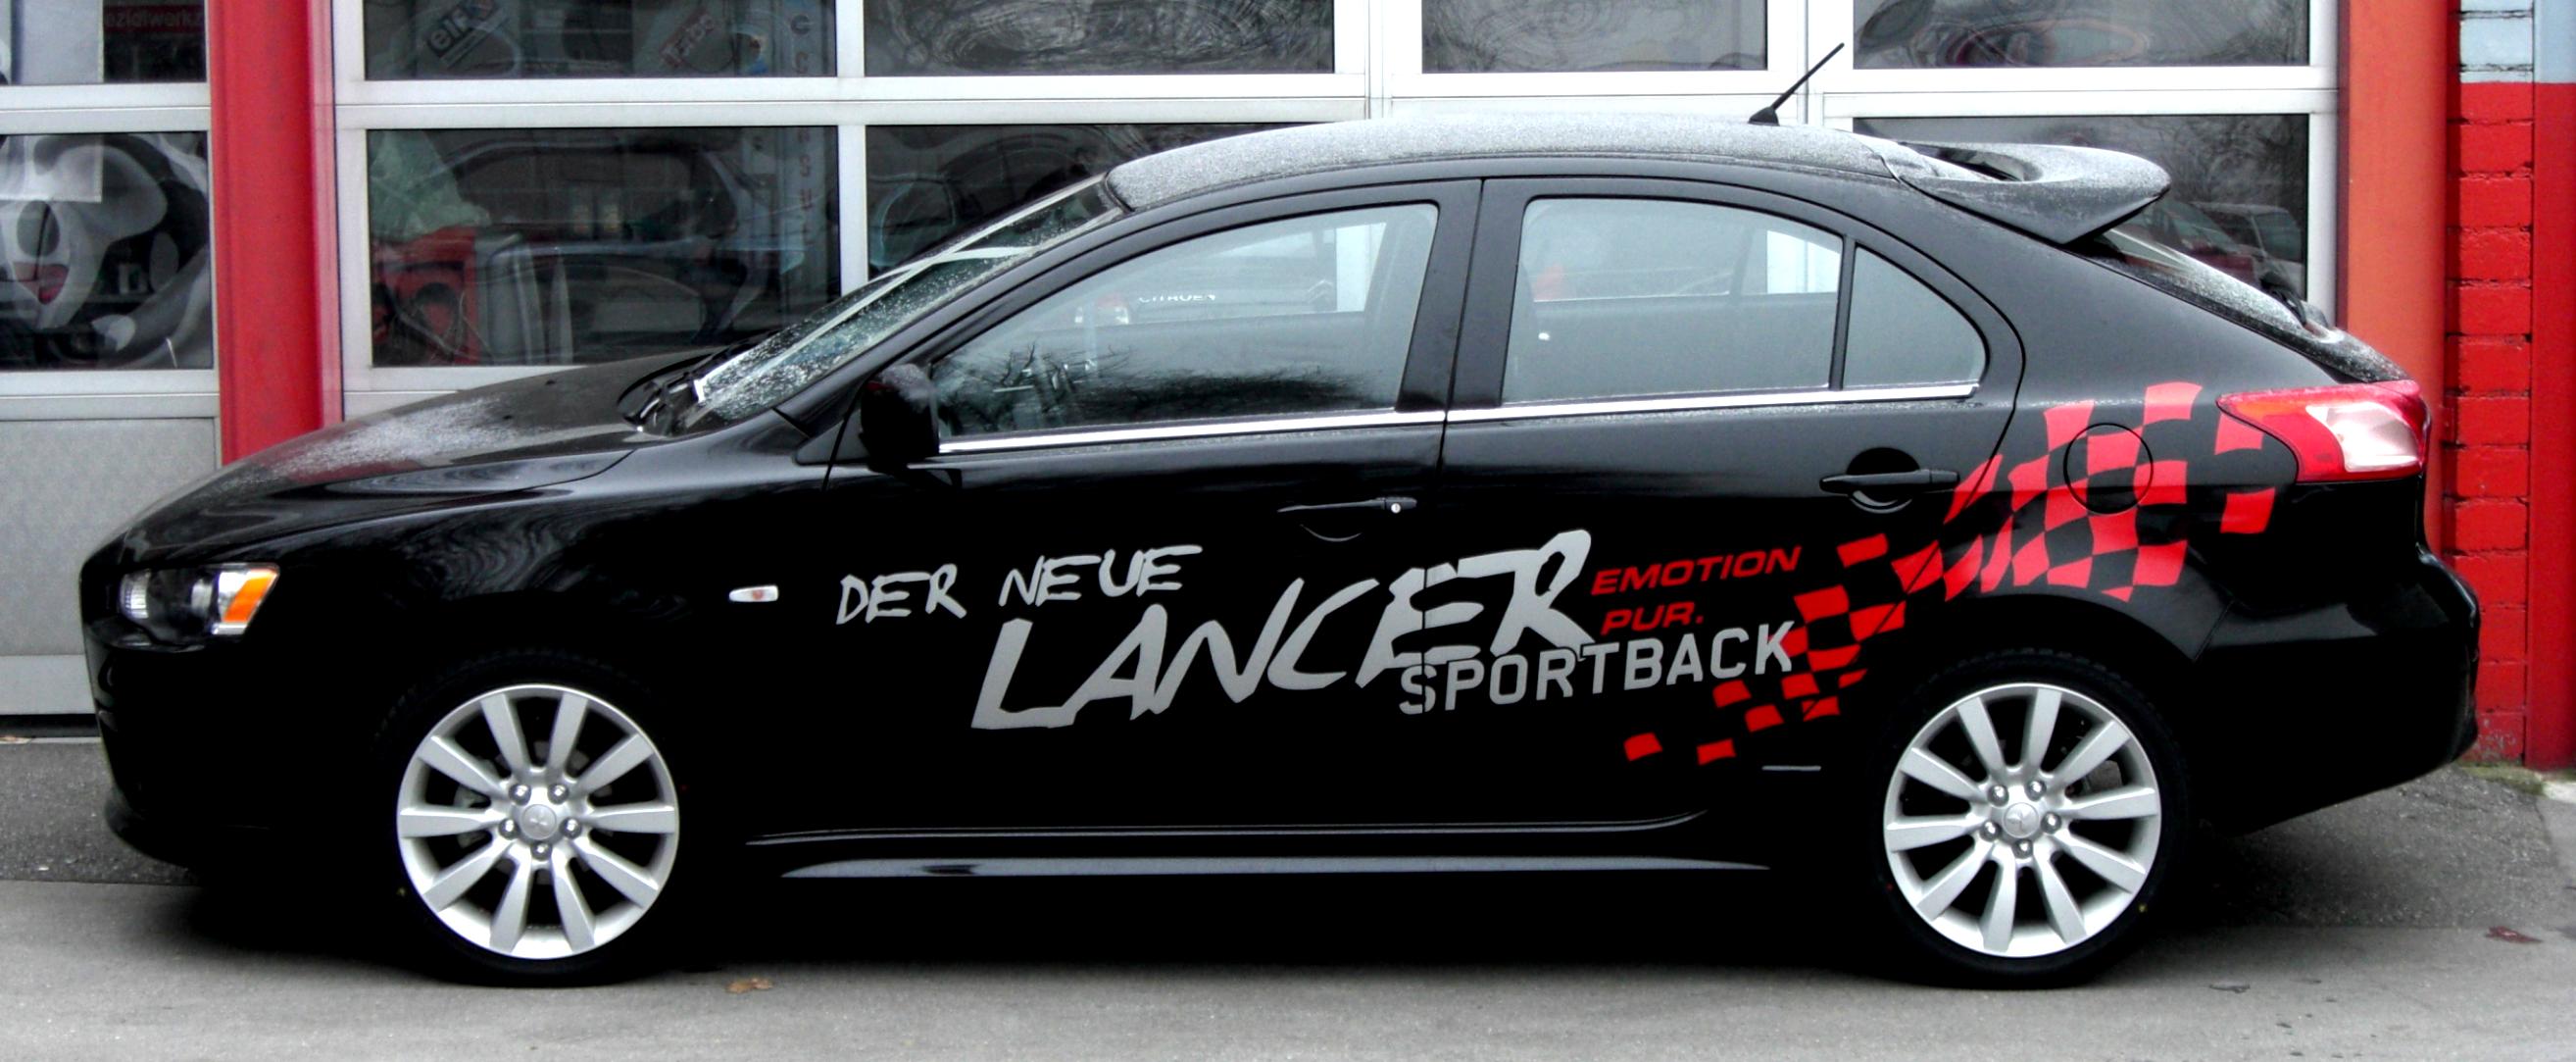 Mitsubishi Lancer Sportback 2008 #19